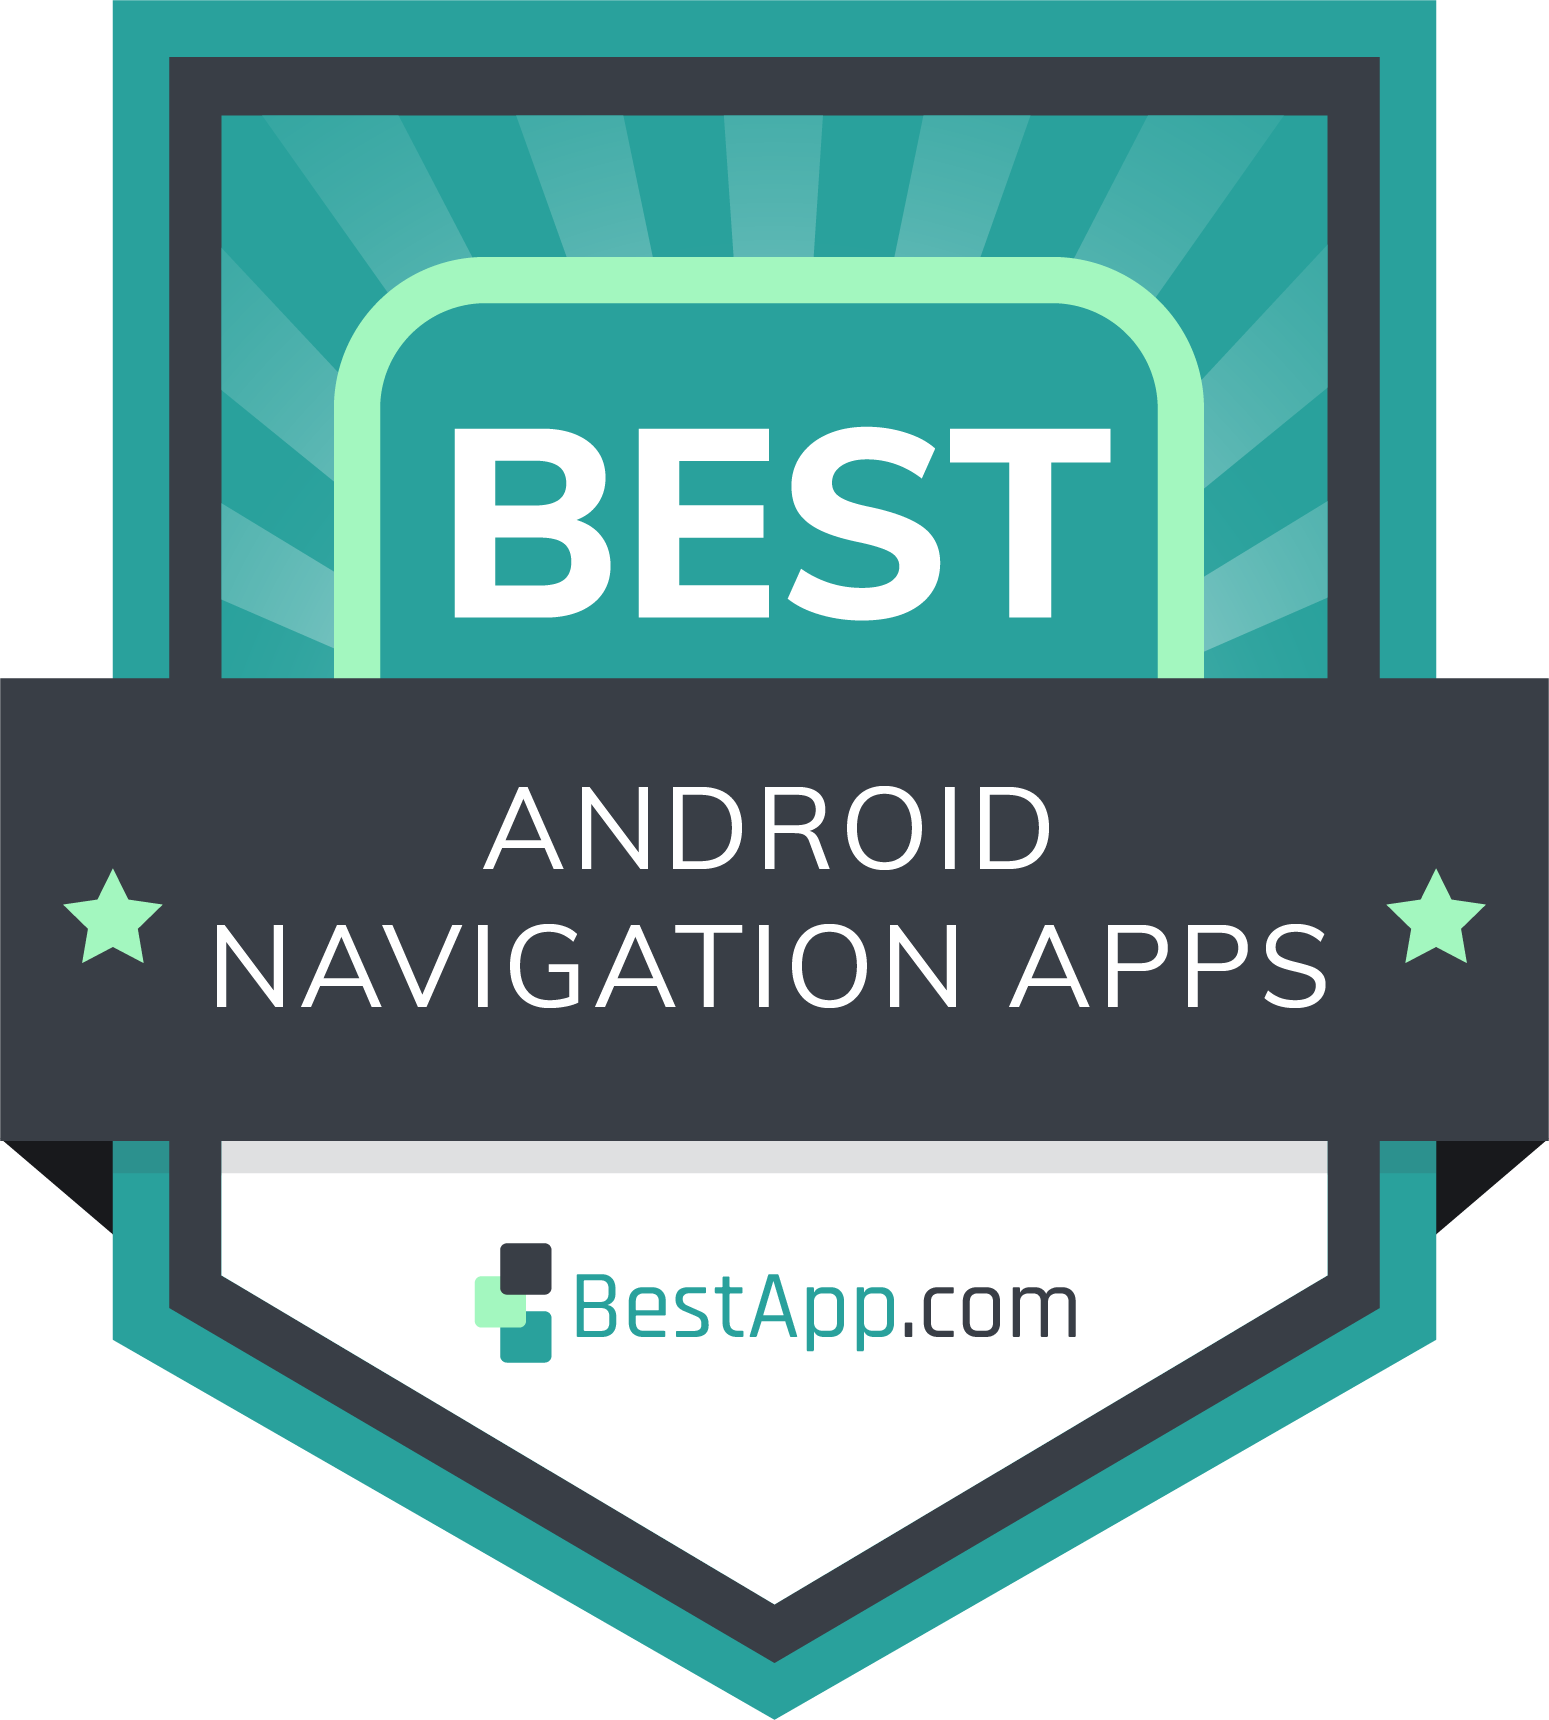 Best Android Navigation Apps Badge